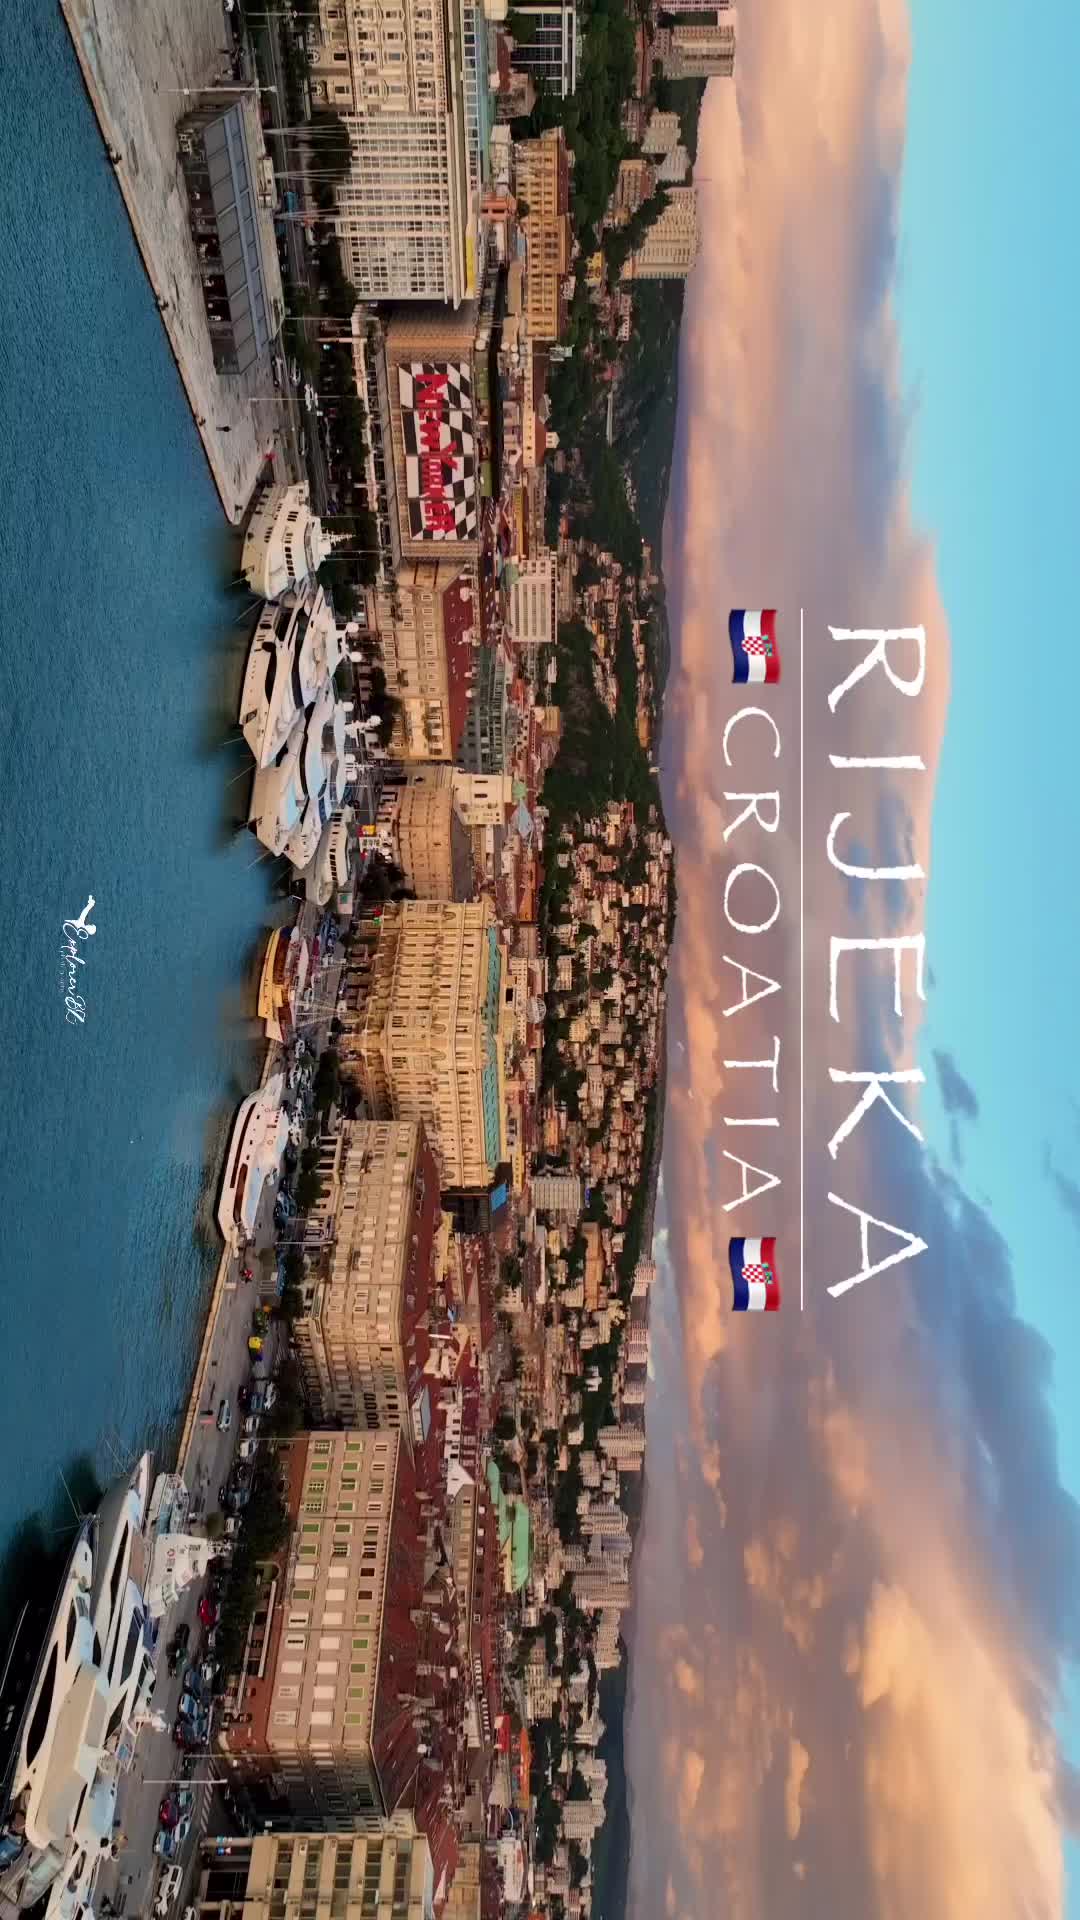 Discover Rijeka, Croatia: A Bird's-Eye City Tour